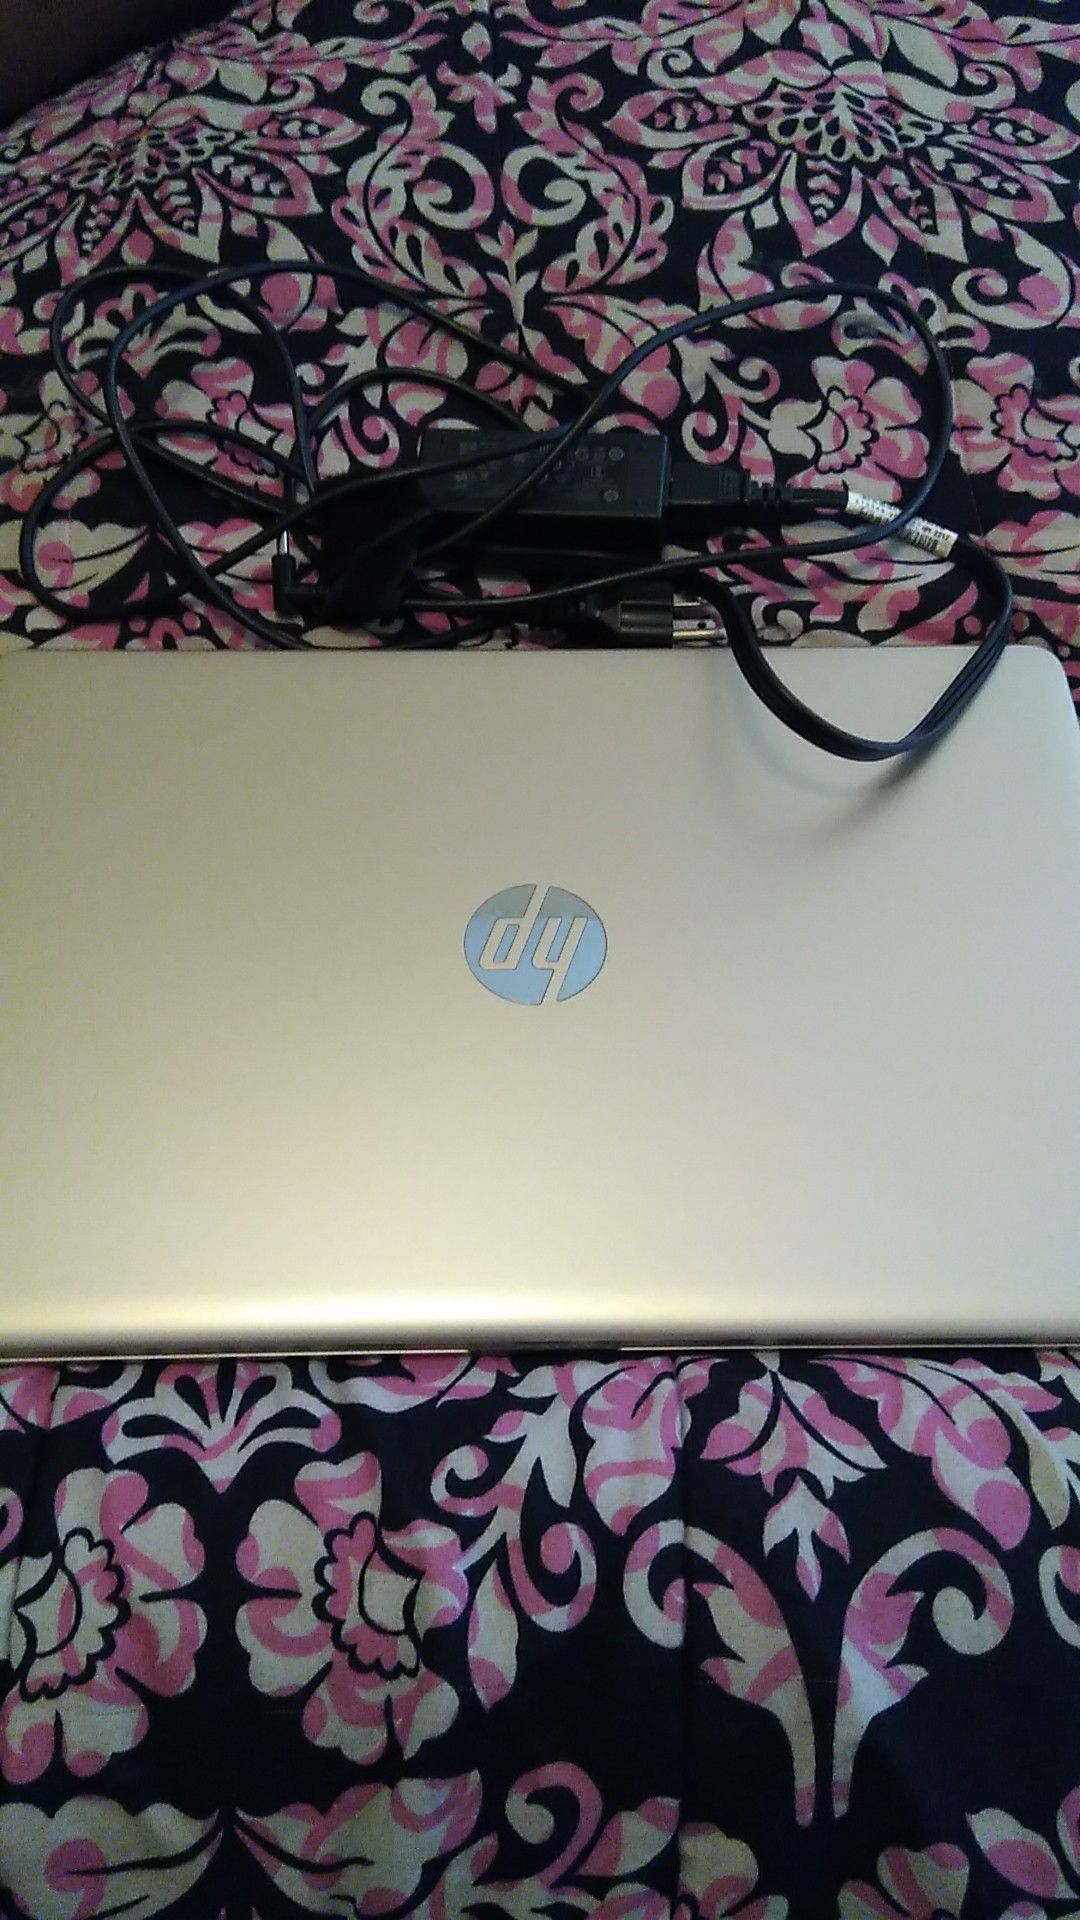 HP Pavilion laptop model 15-bw071nr